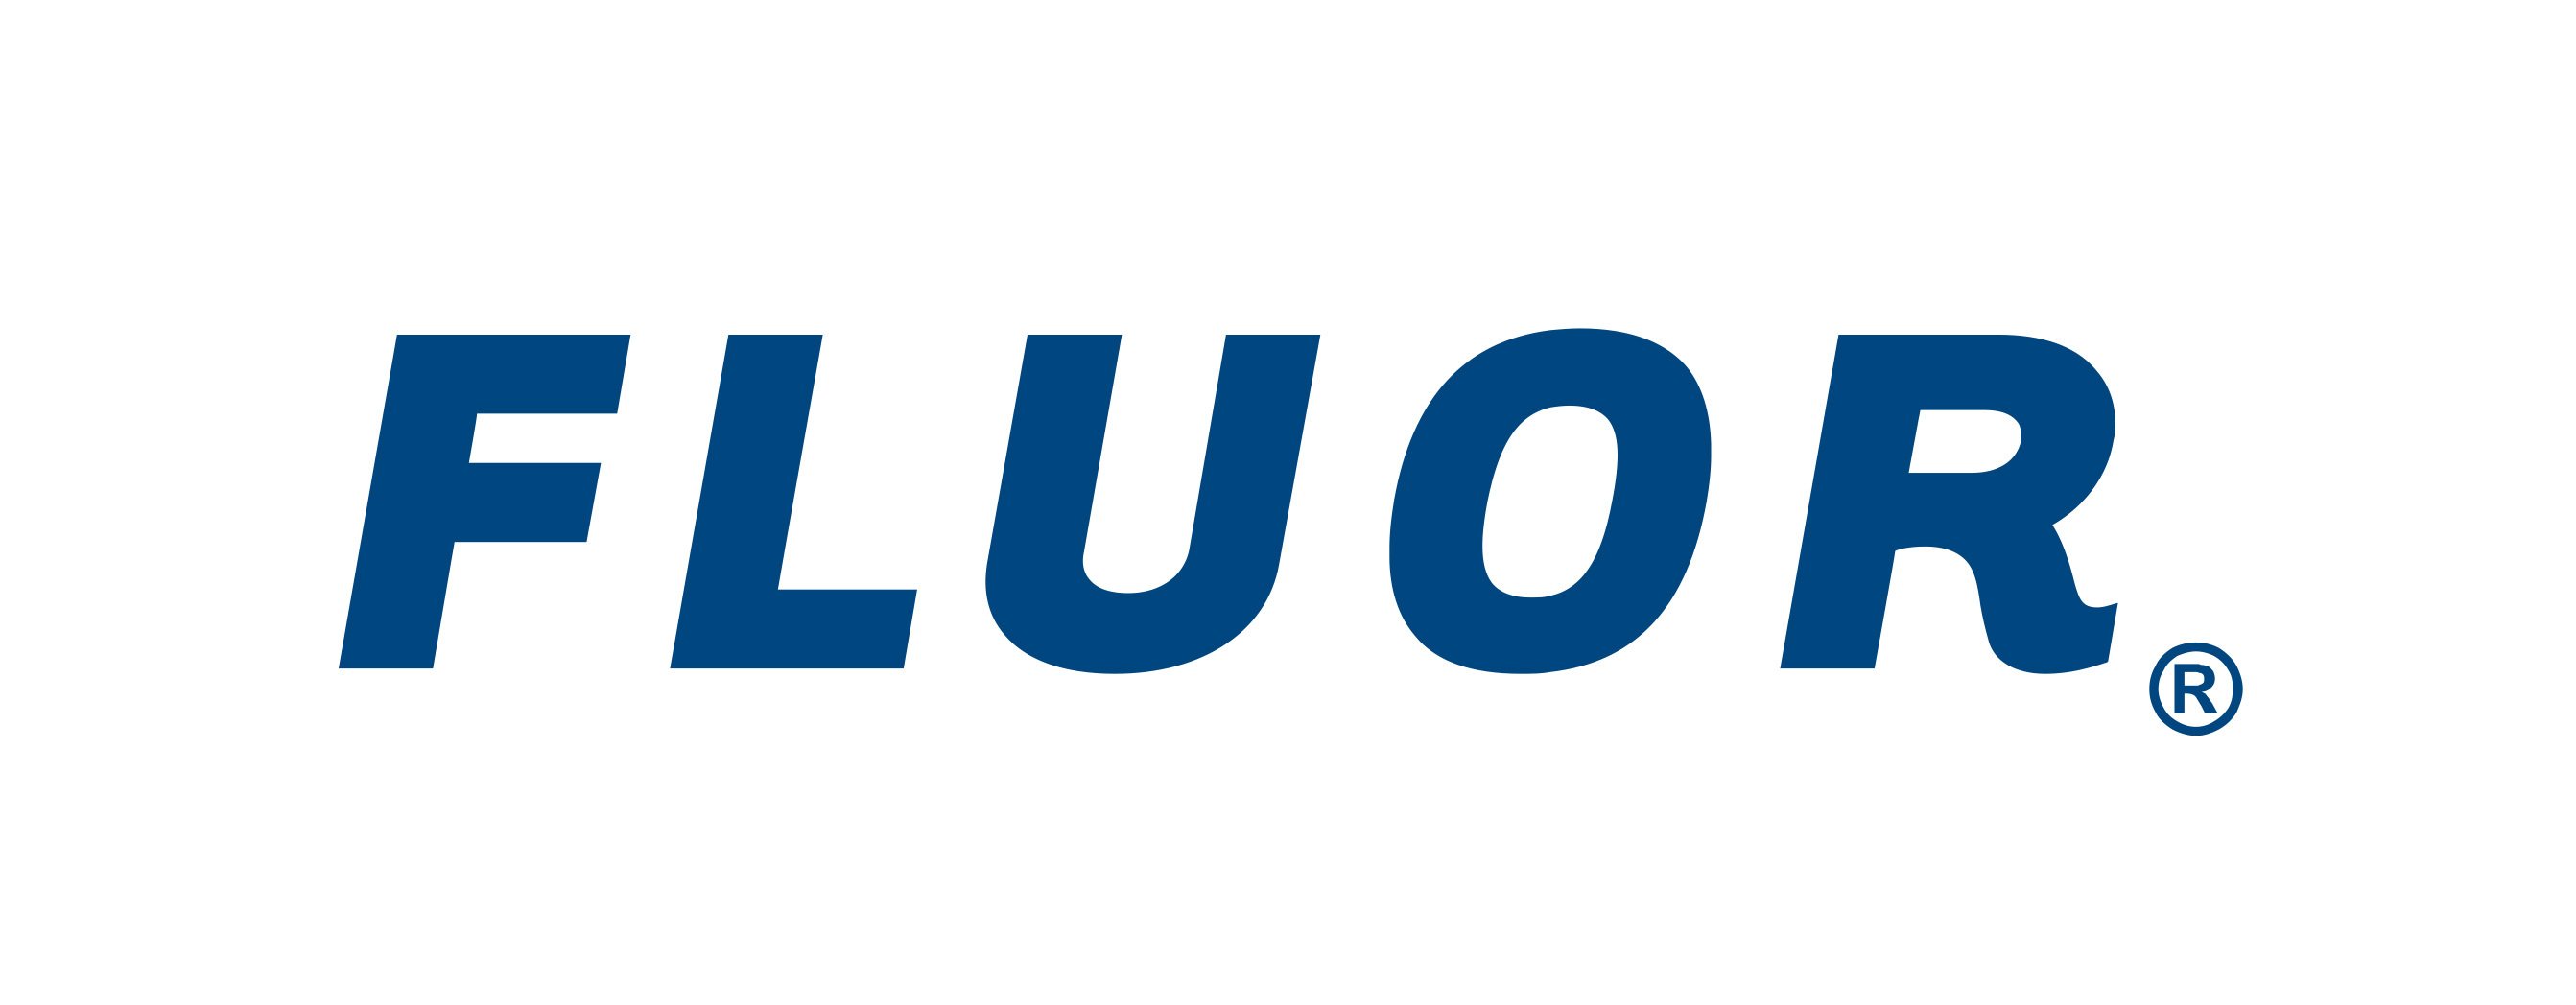 FLUOR Logo